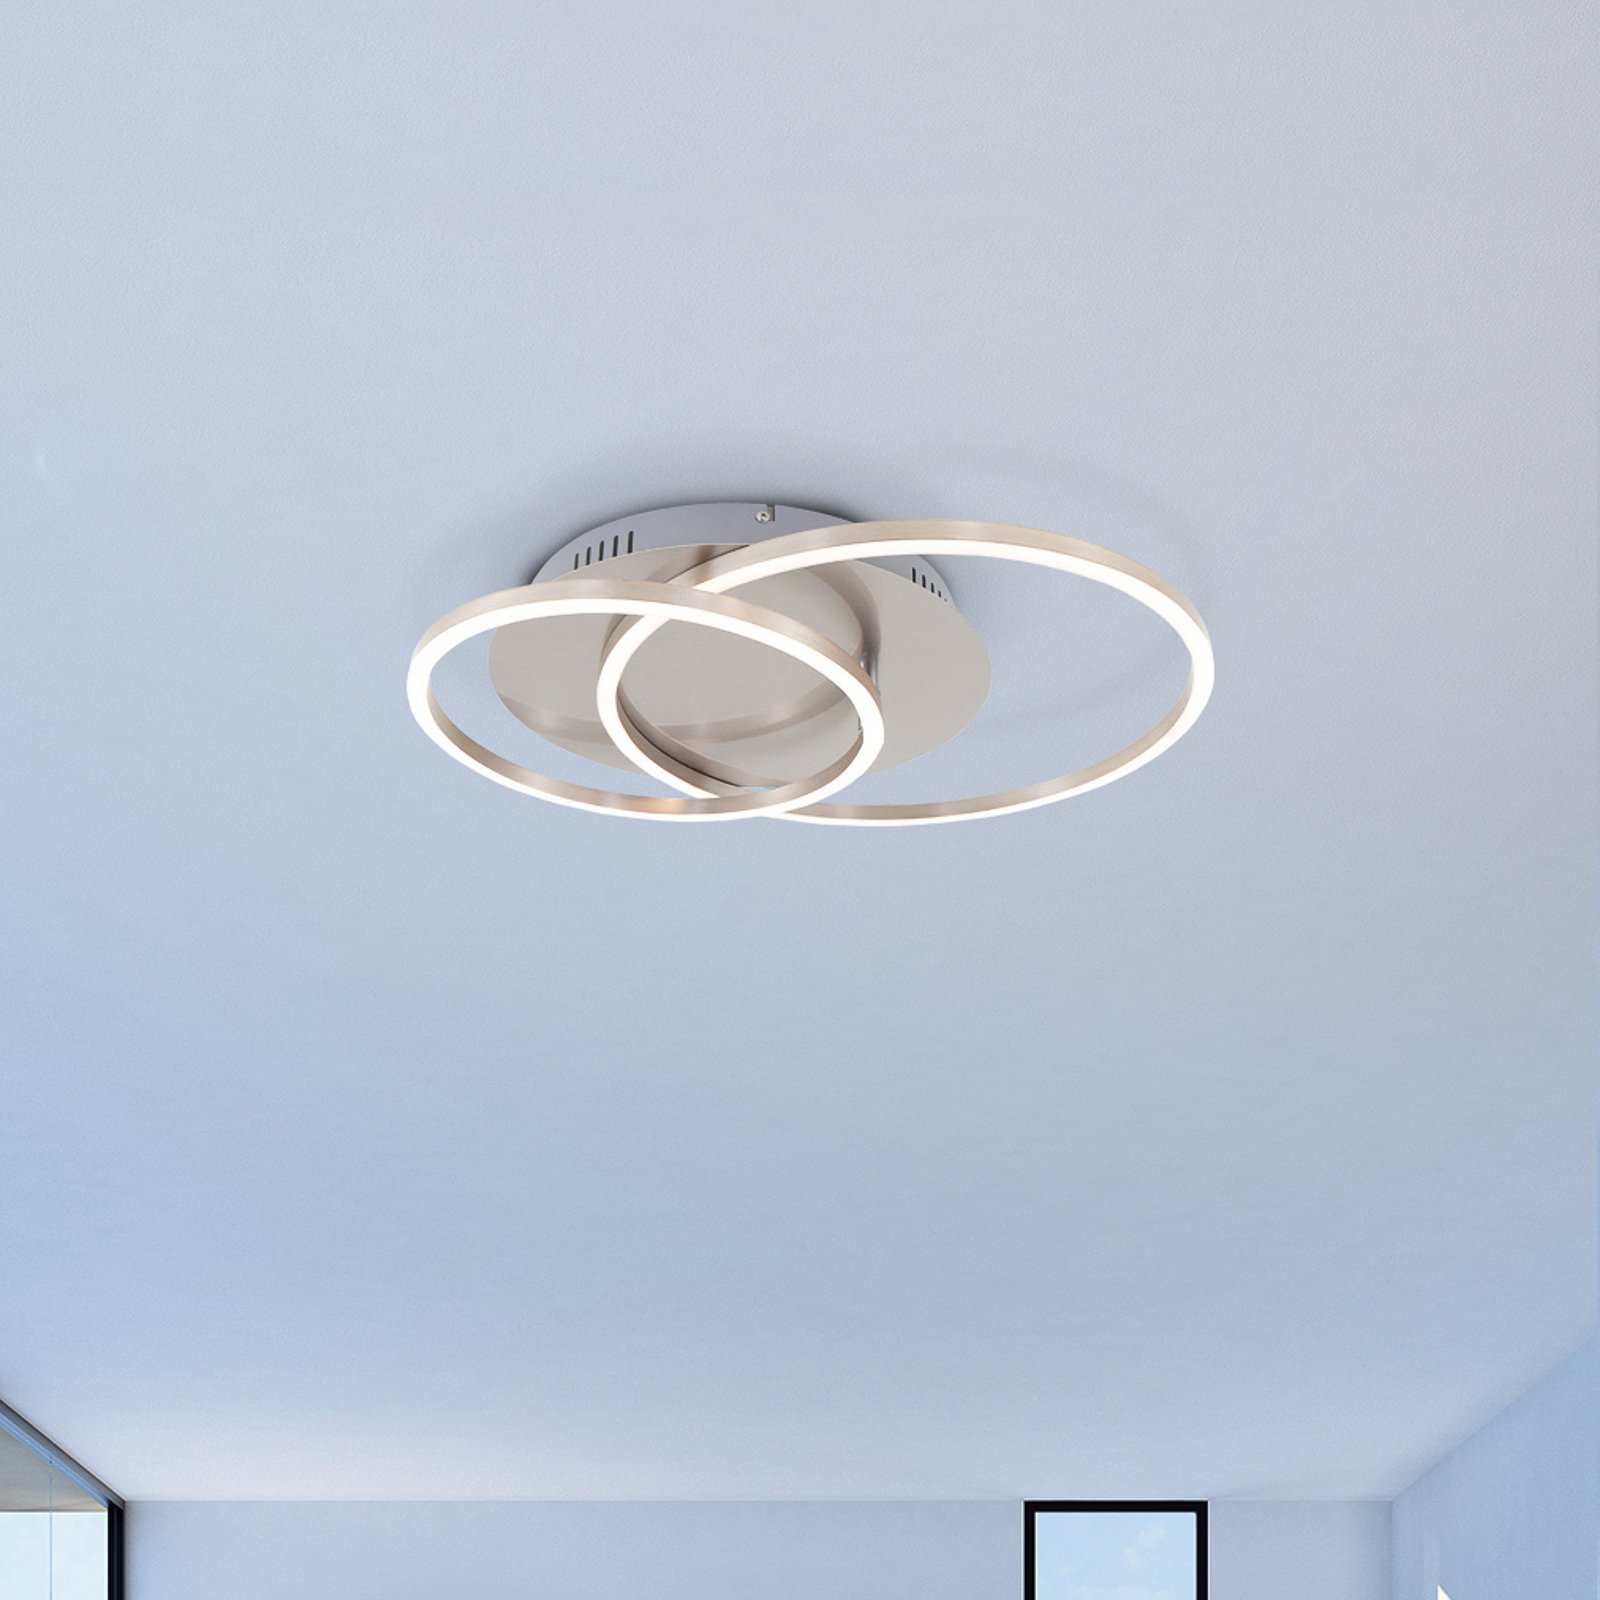 LED plafondlamp Frames twee ringen, draaibaar